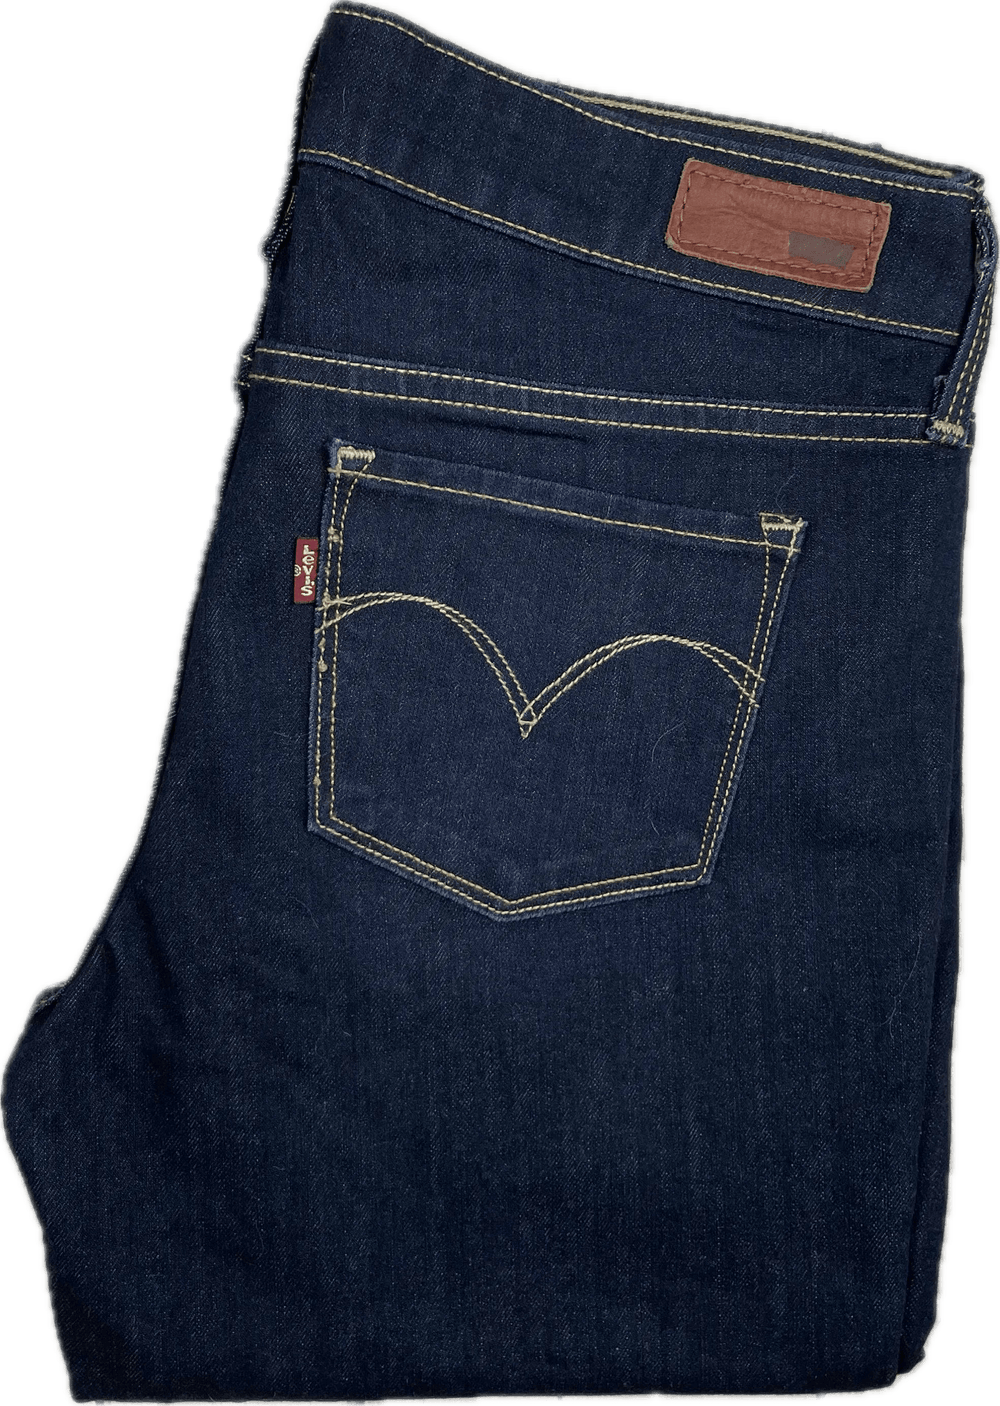 Levis Slight Curve Modern Rise Straight Jeans -Size 28 (10AU) - Jean Pool